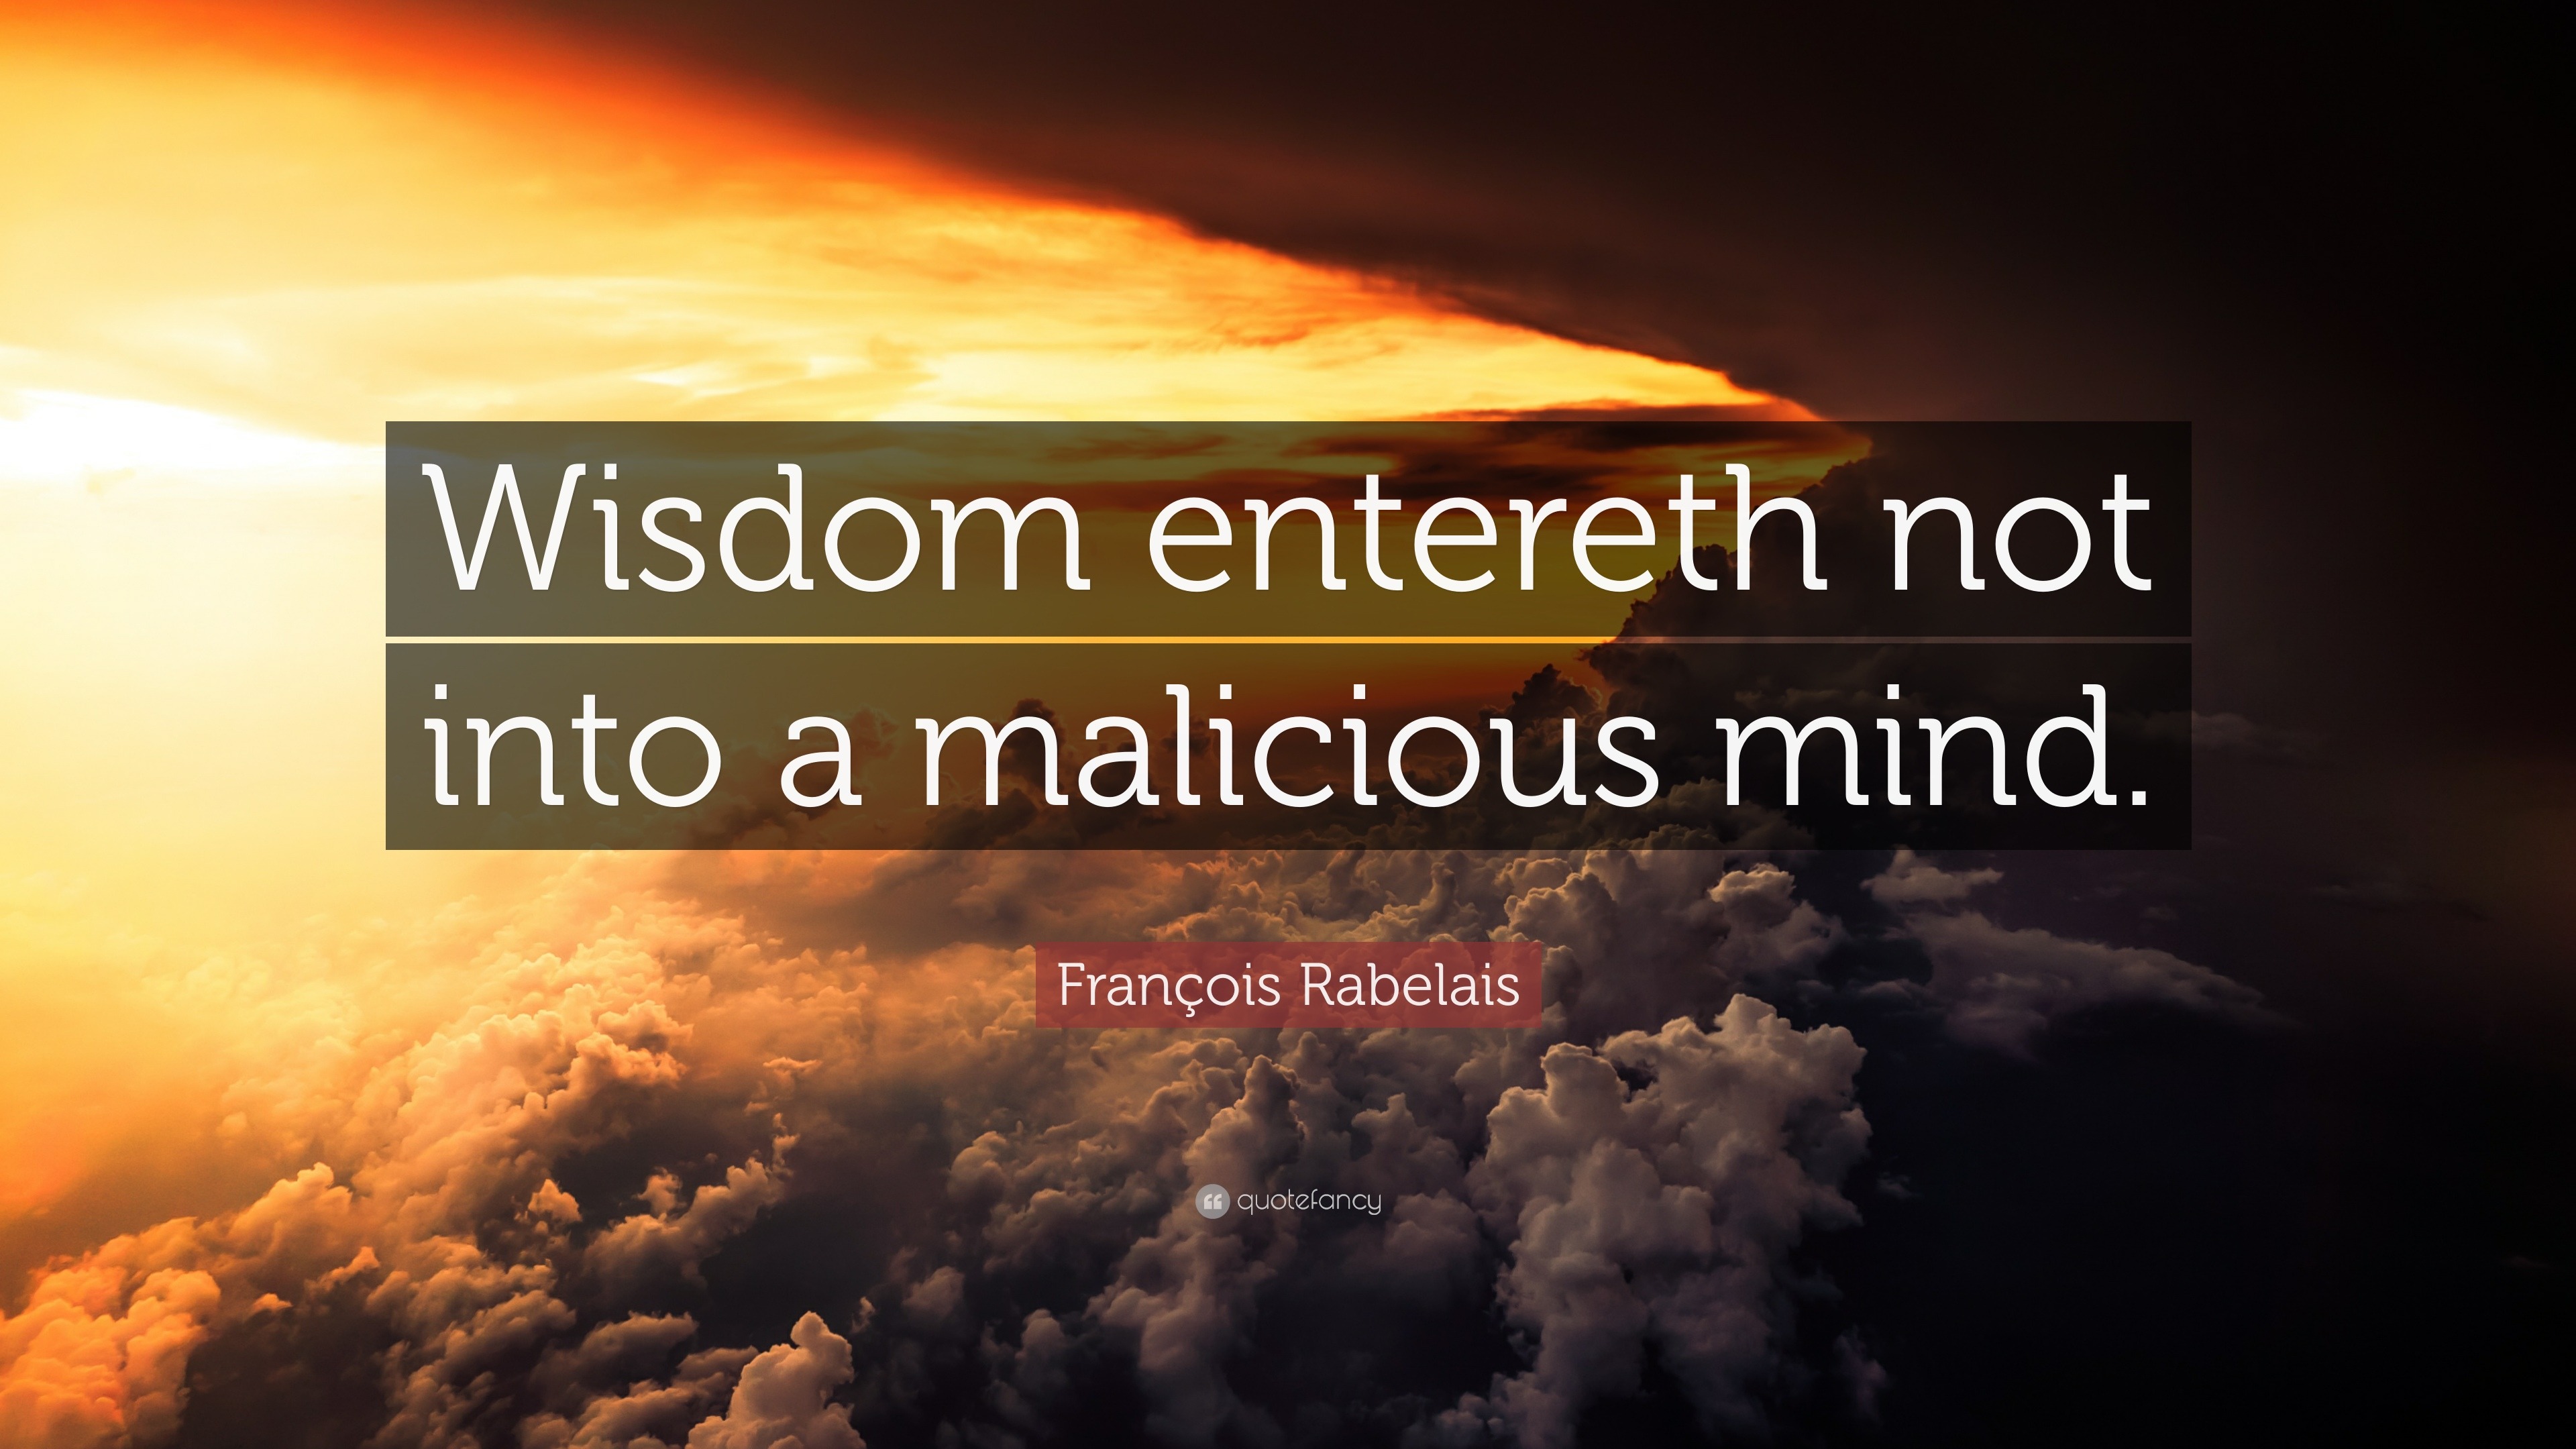 François Rabelais Quote: “Wisdom entereth not into a malicious mind